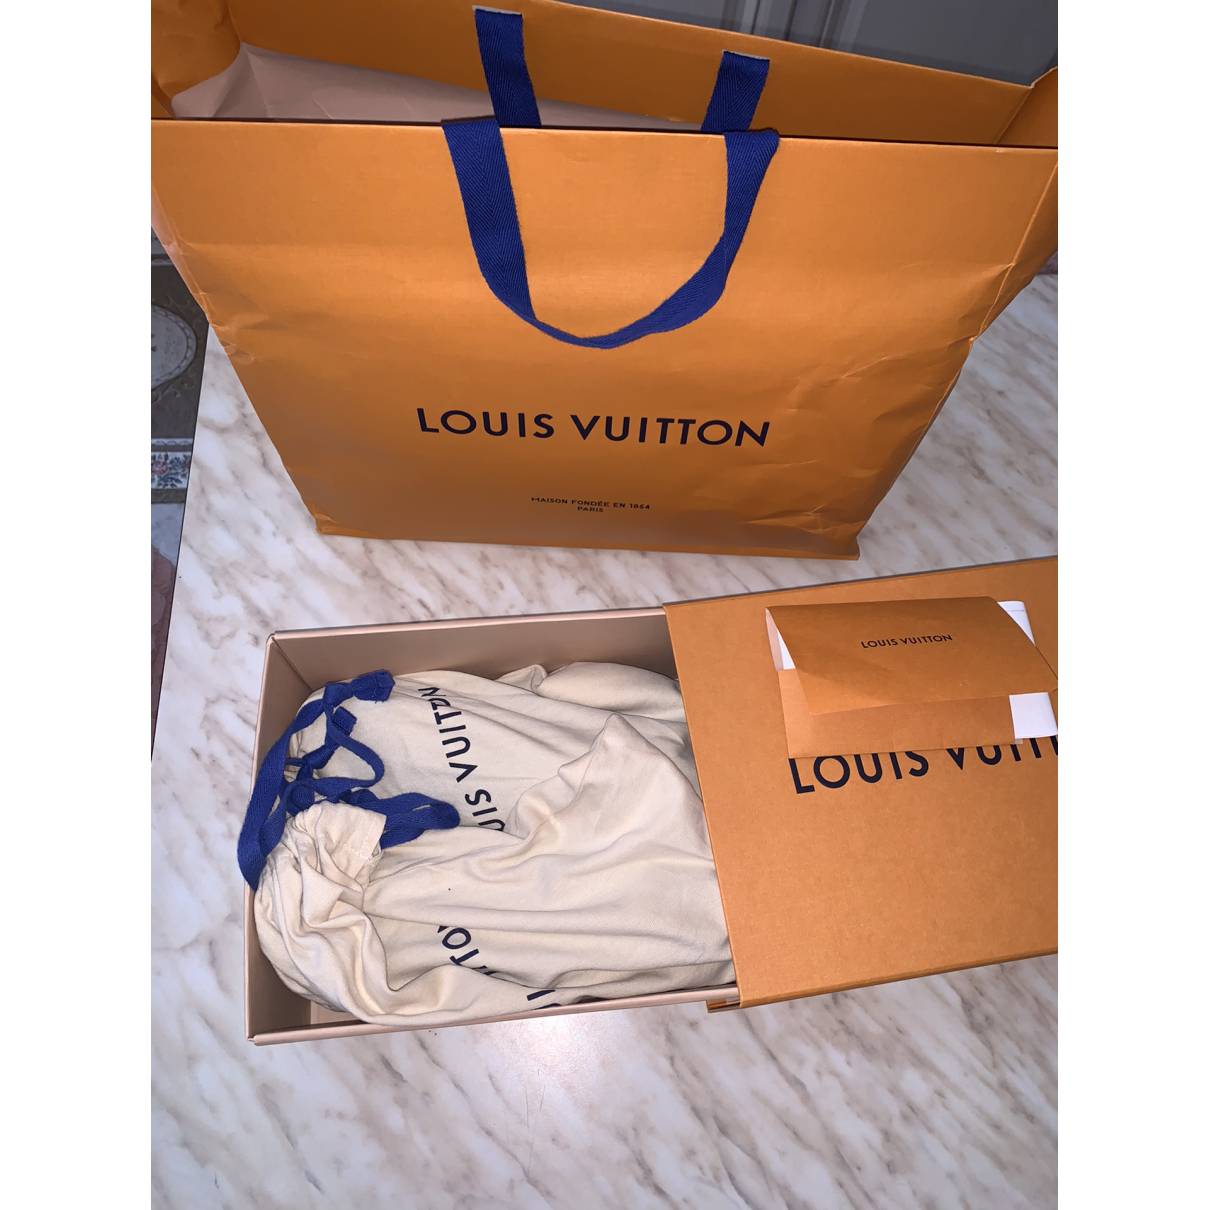 Louis Vuitton Shopping Paper Bag